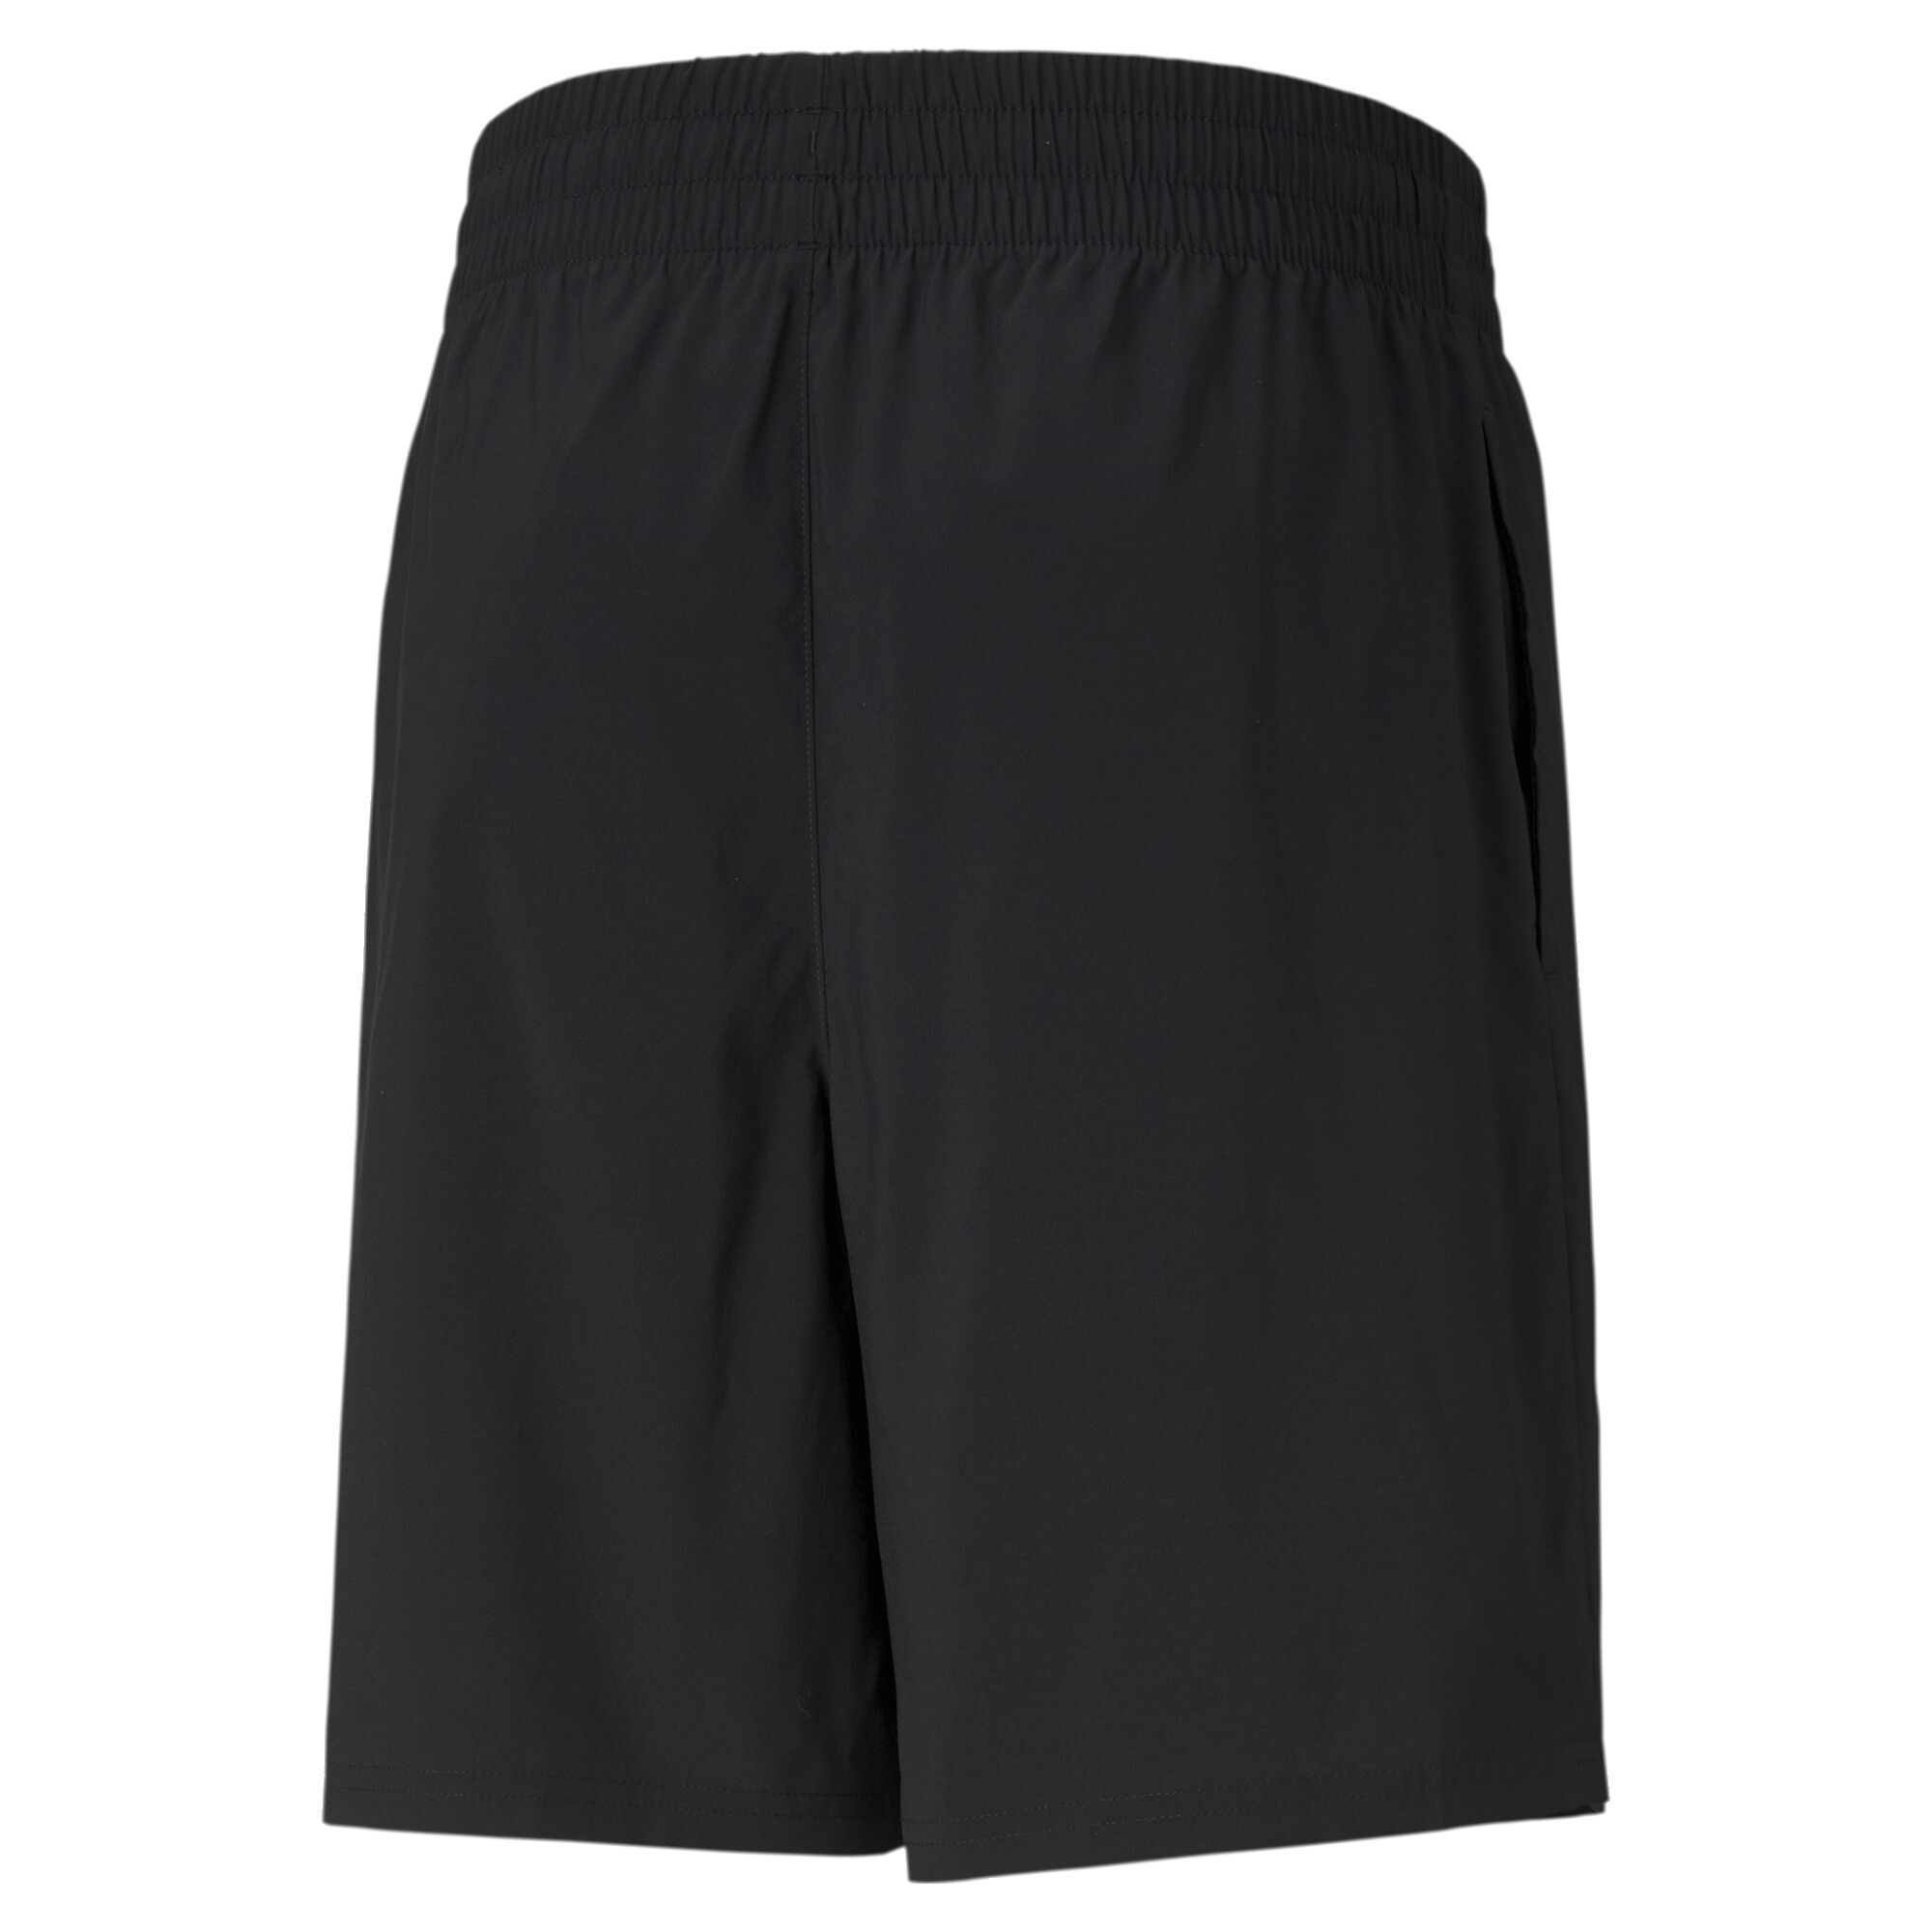 Men's Puma Favourite Blaster 7's Training Shorts, Black, Size S, Clothing